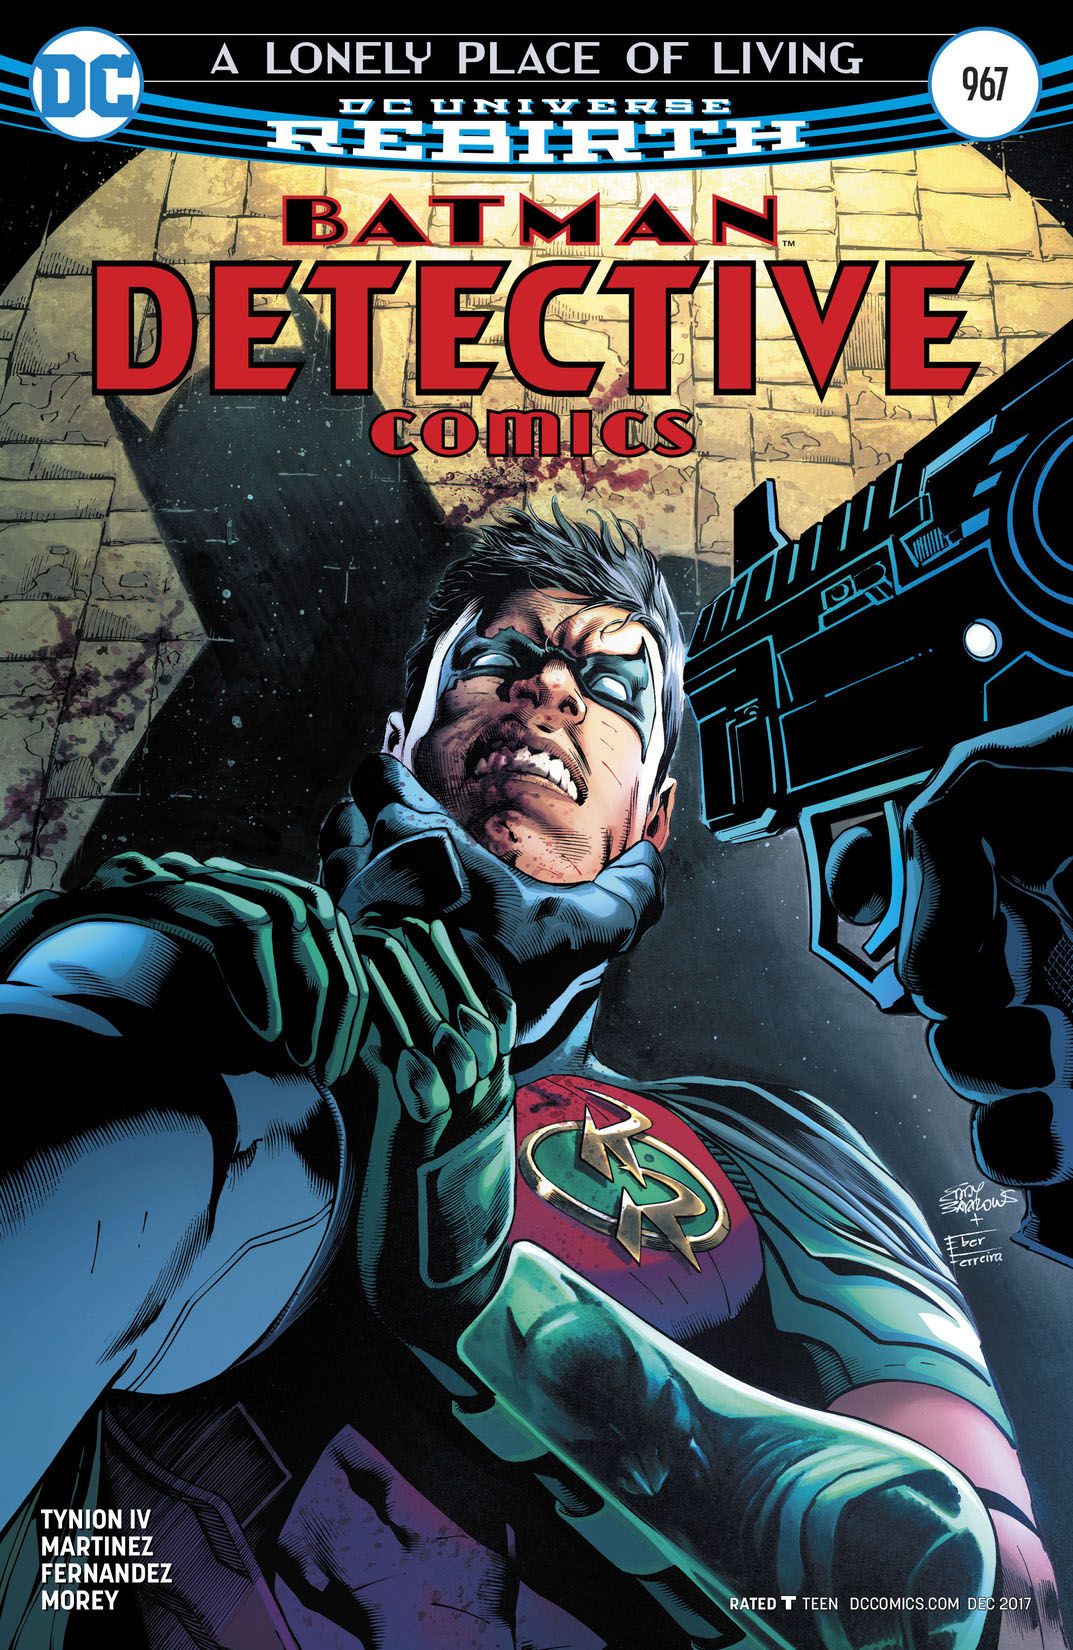 Detective Comics (2016-) #967 preview images